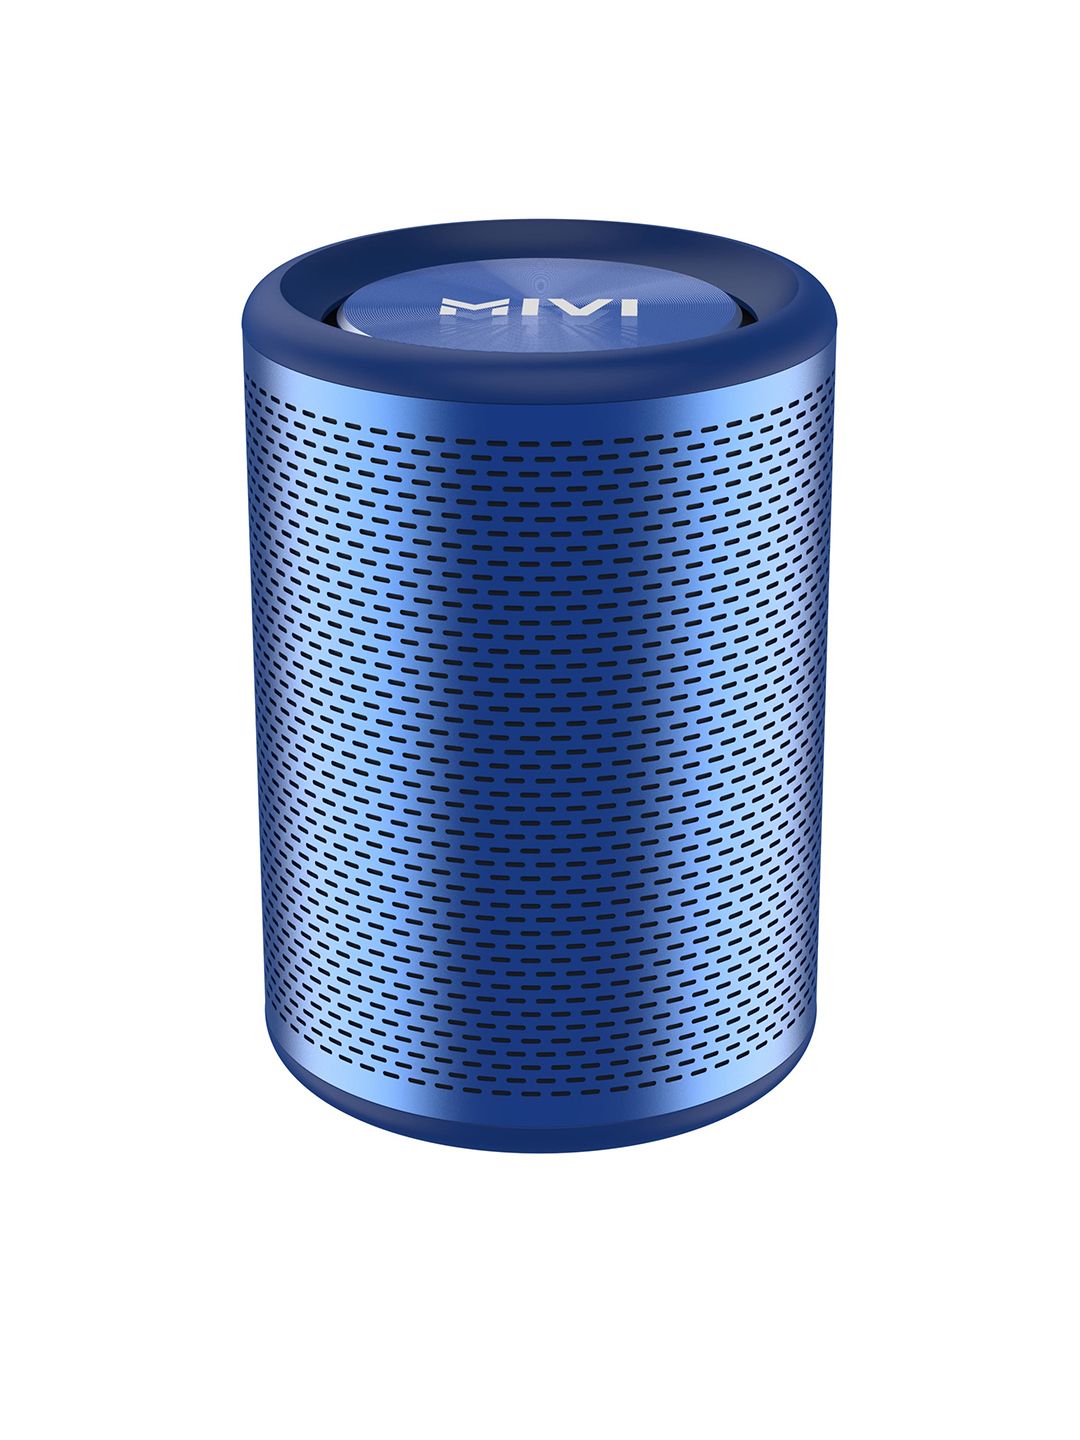 Mivi Octave 3 Wireless Bluetooth Speaker, 16W, (Blue) Price in India